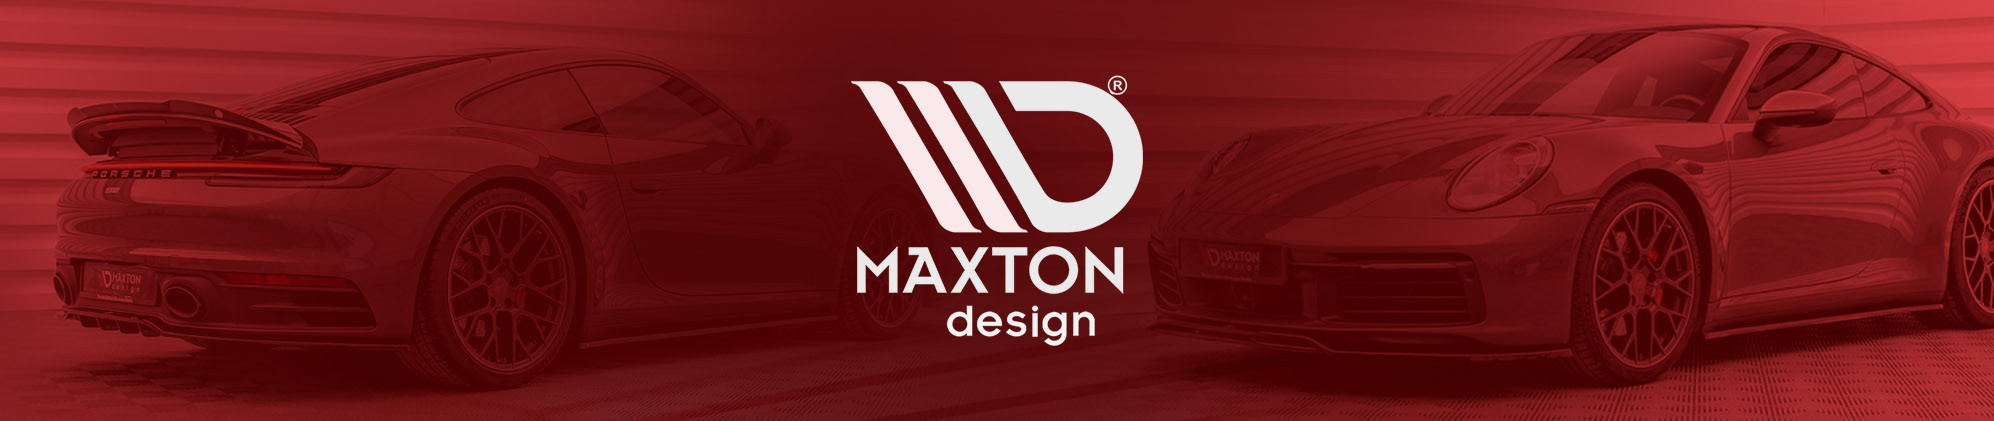 Maxton_Design